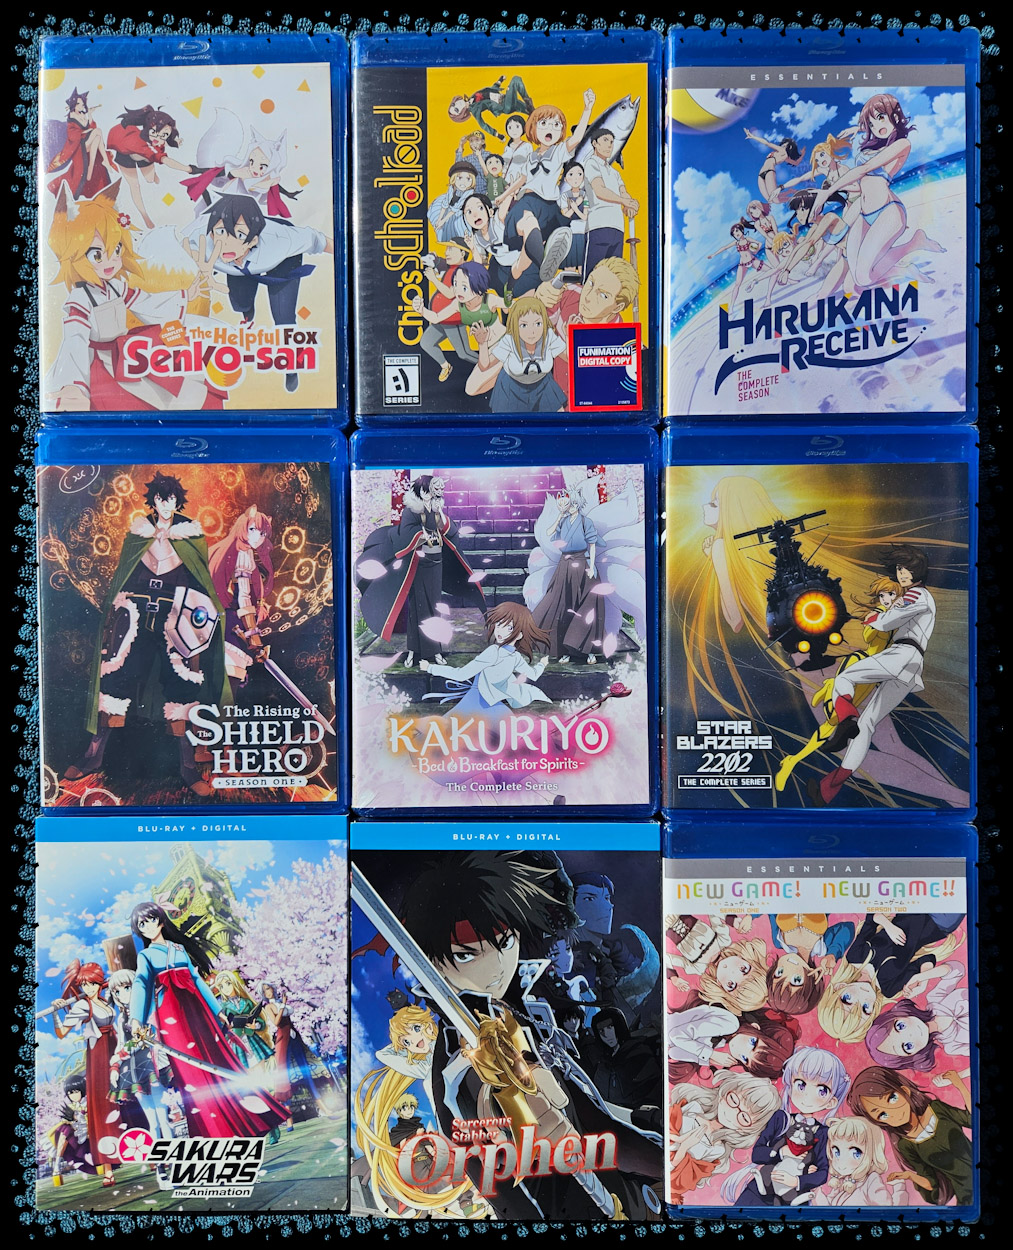 New on Blu-ray: HARUKANA RECEIVE - The Complete Series